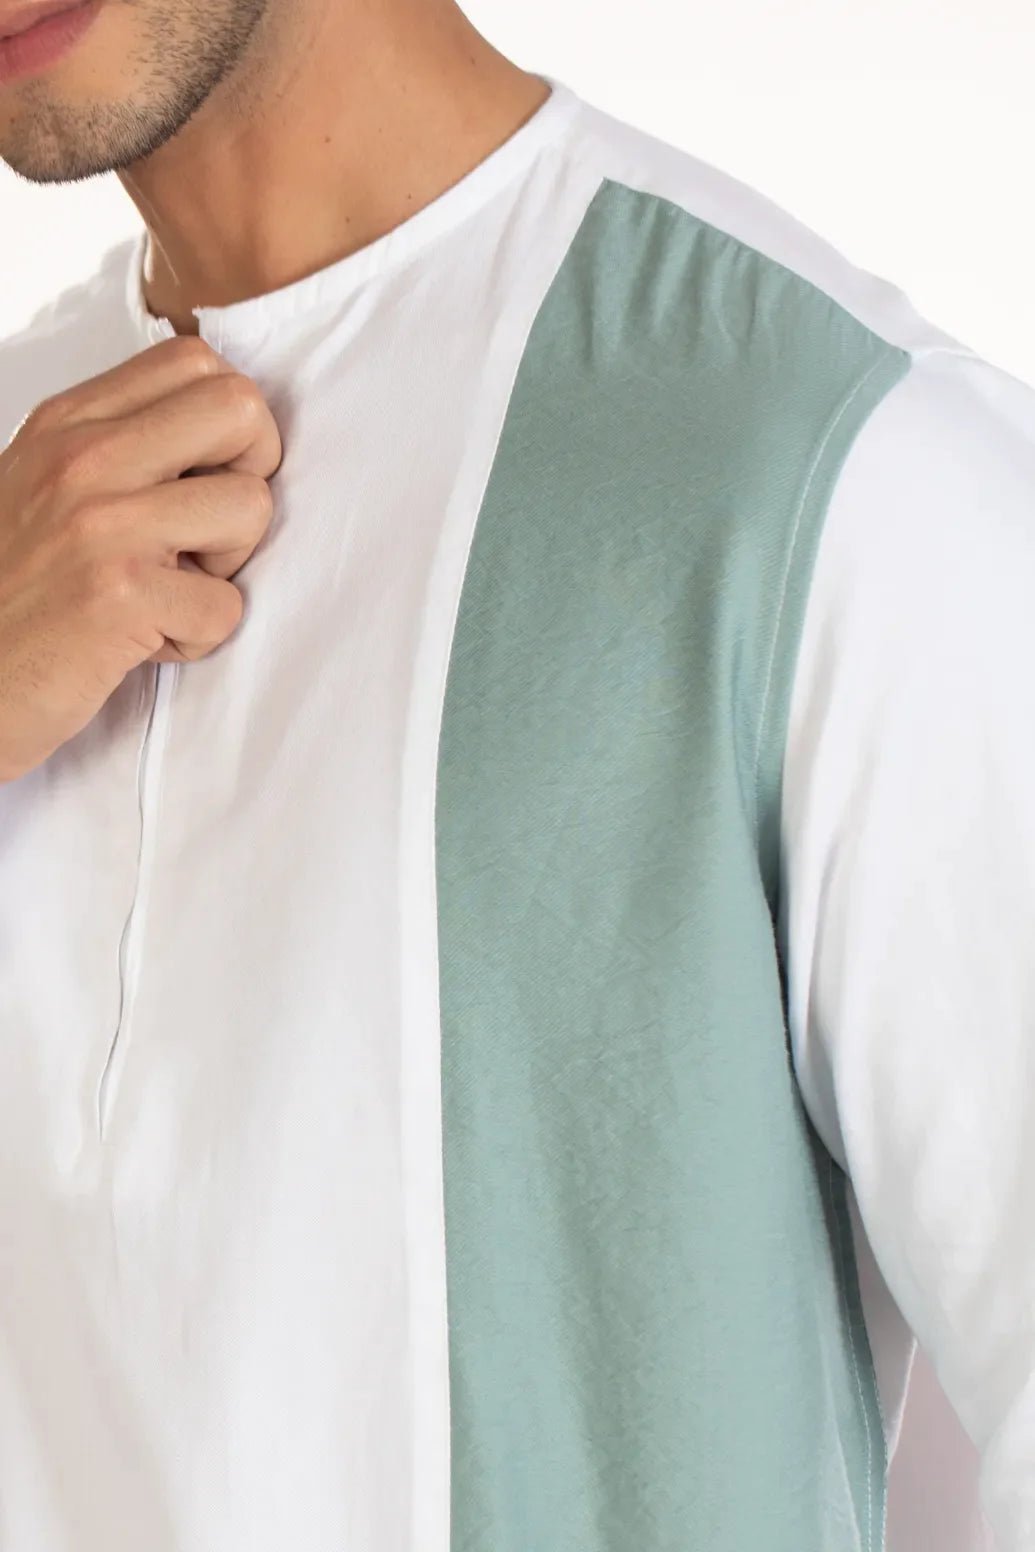 Buy Round Neck Contrast Pannel Shirt Online.